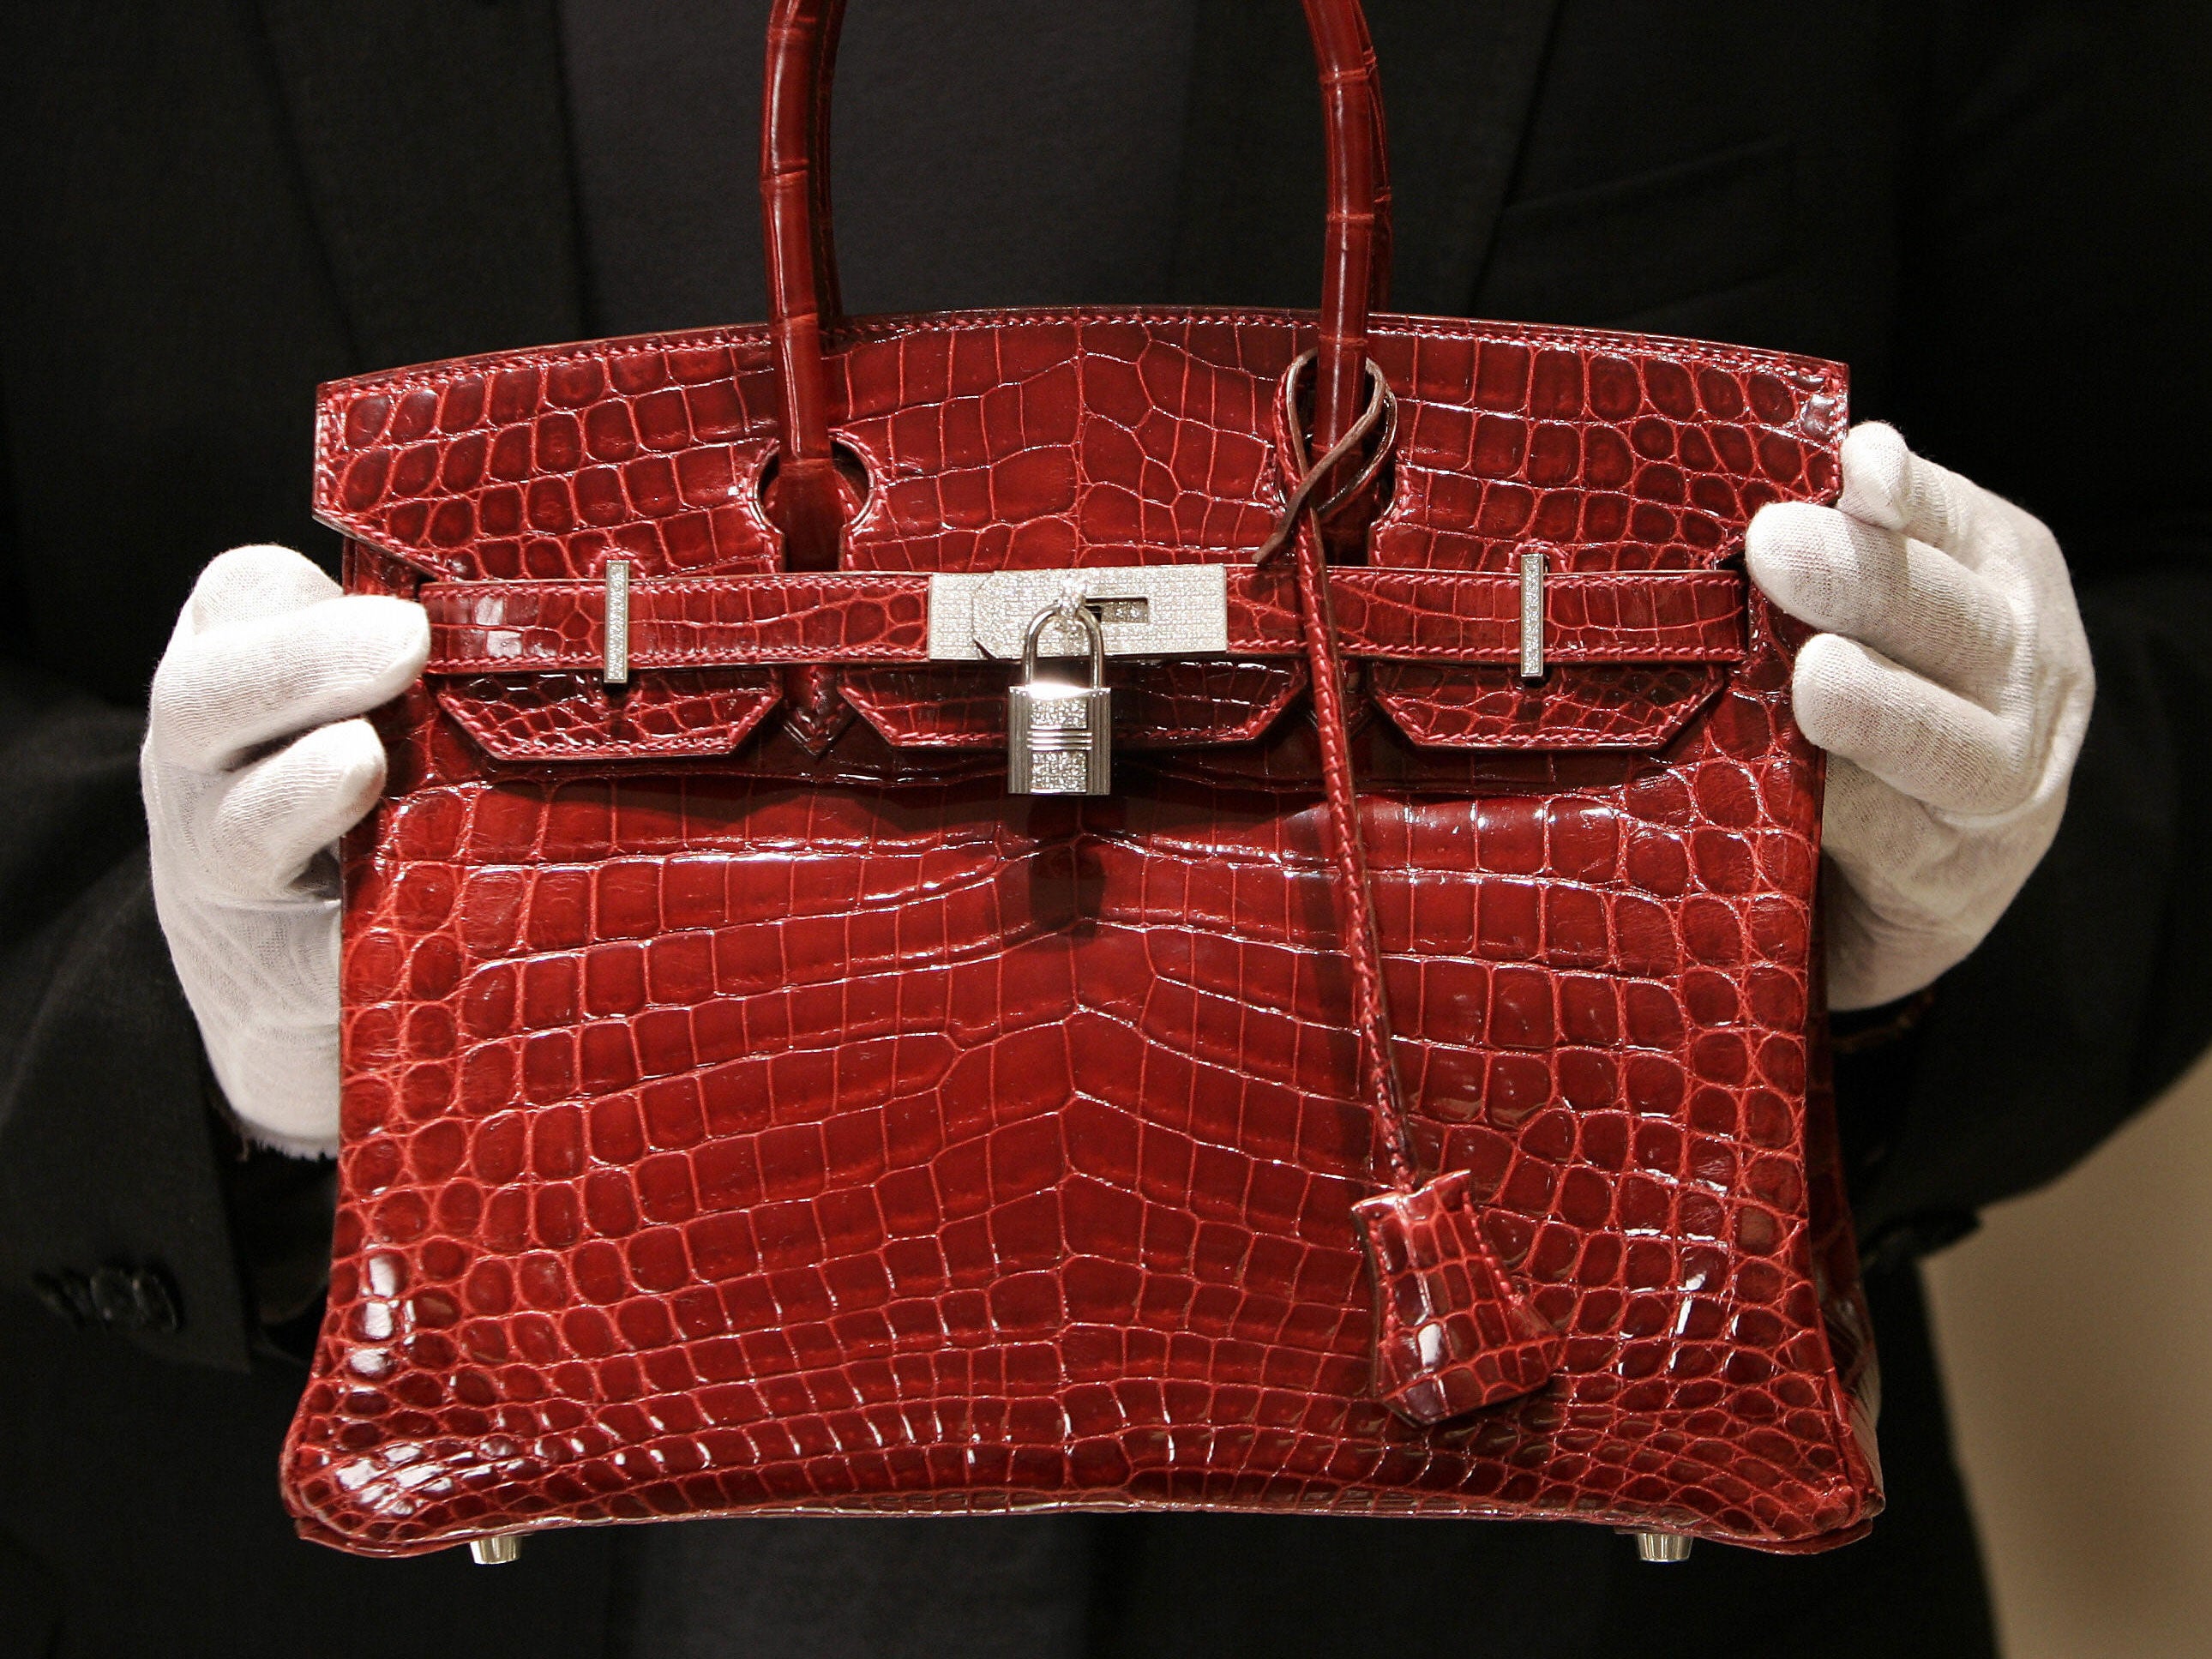 An £82,657 Hermès Birkin bag at the Hermès shop in New York